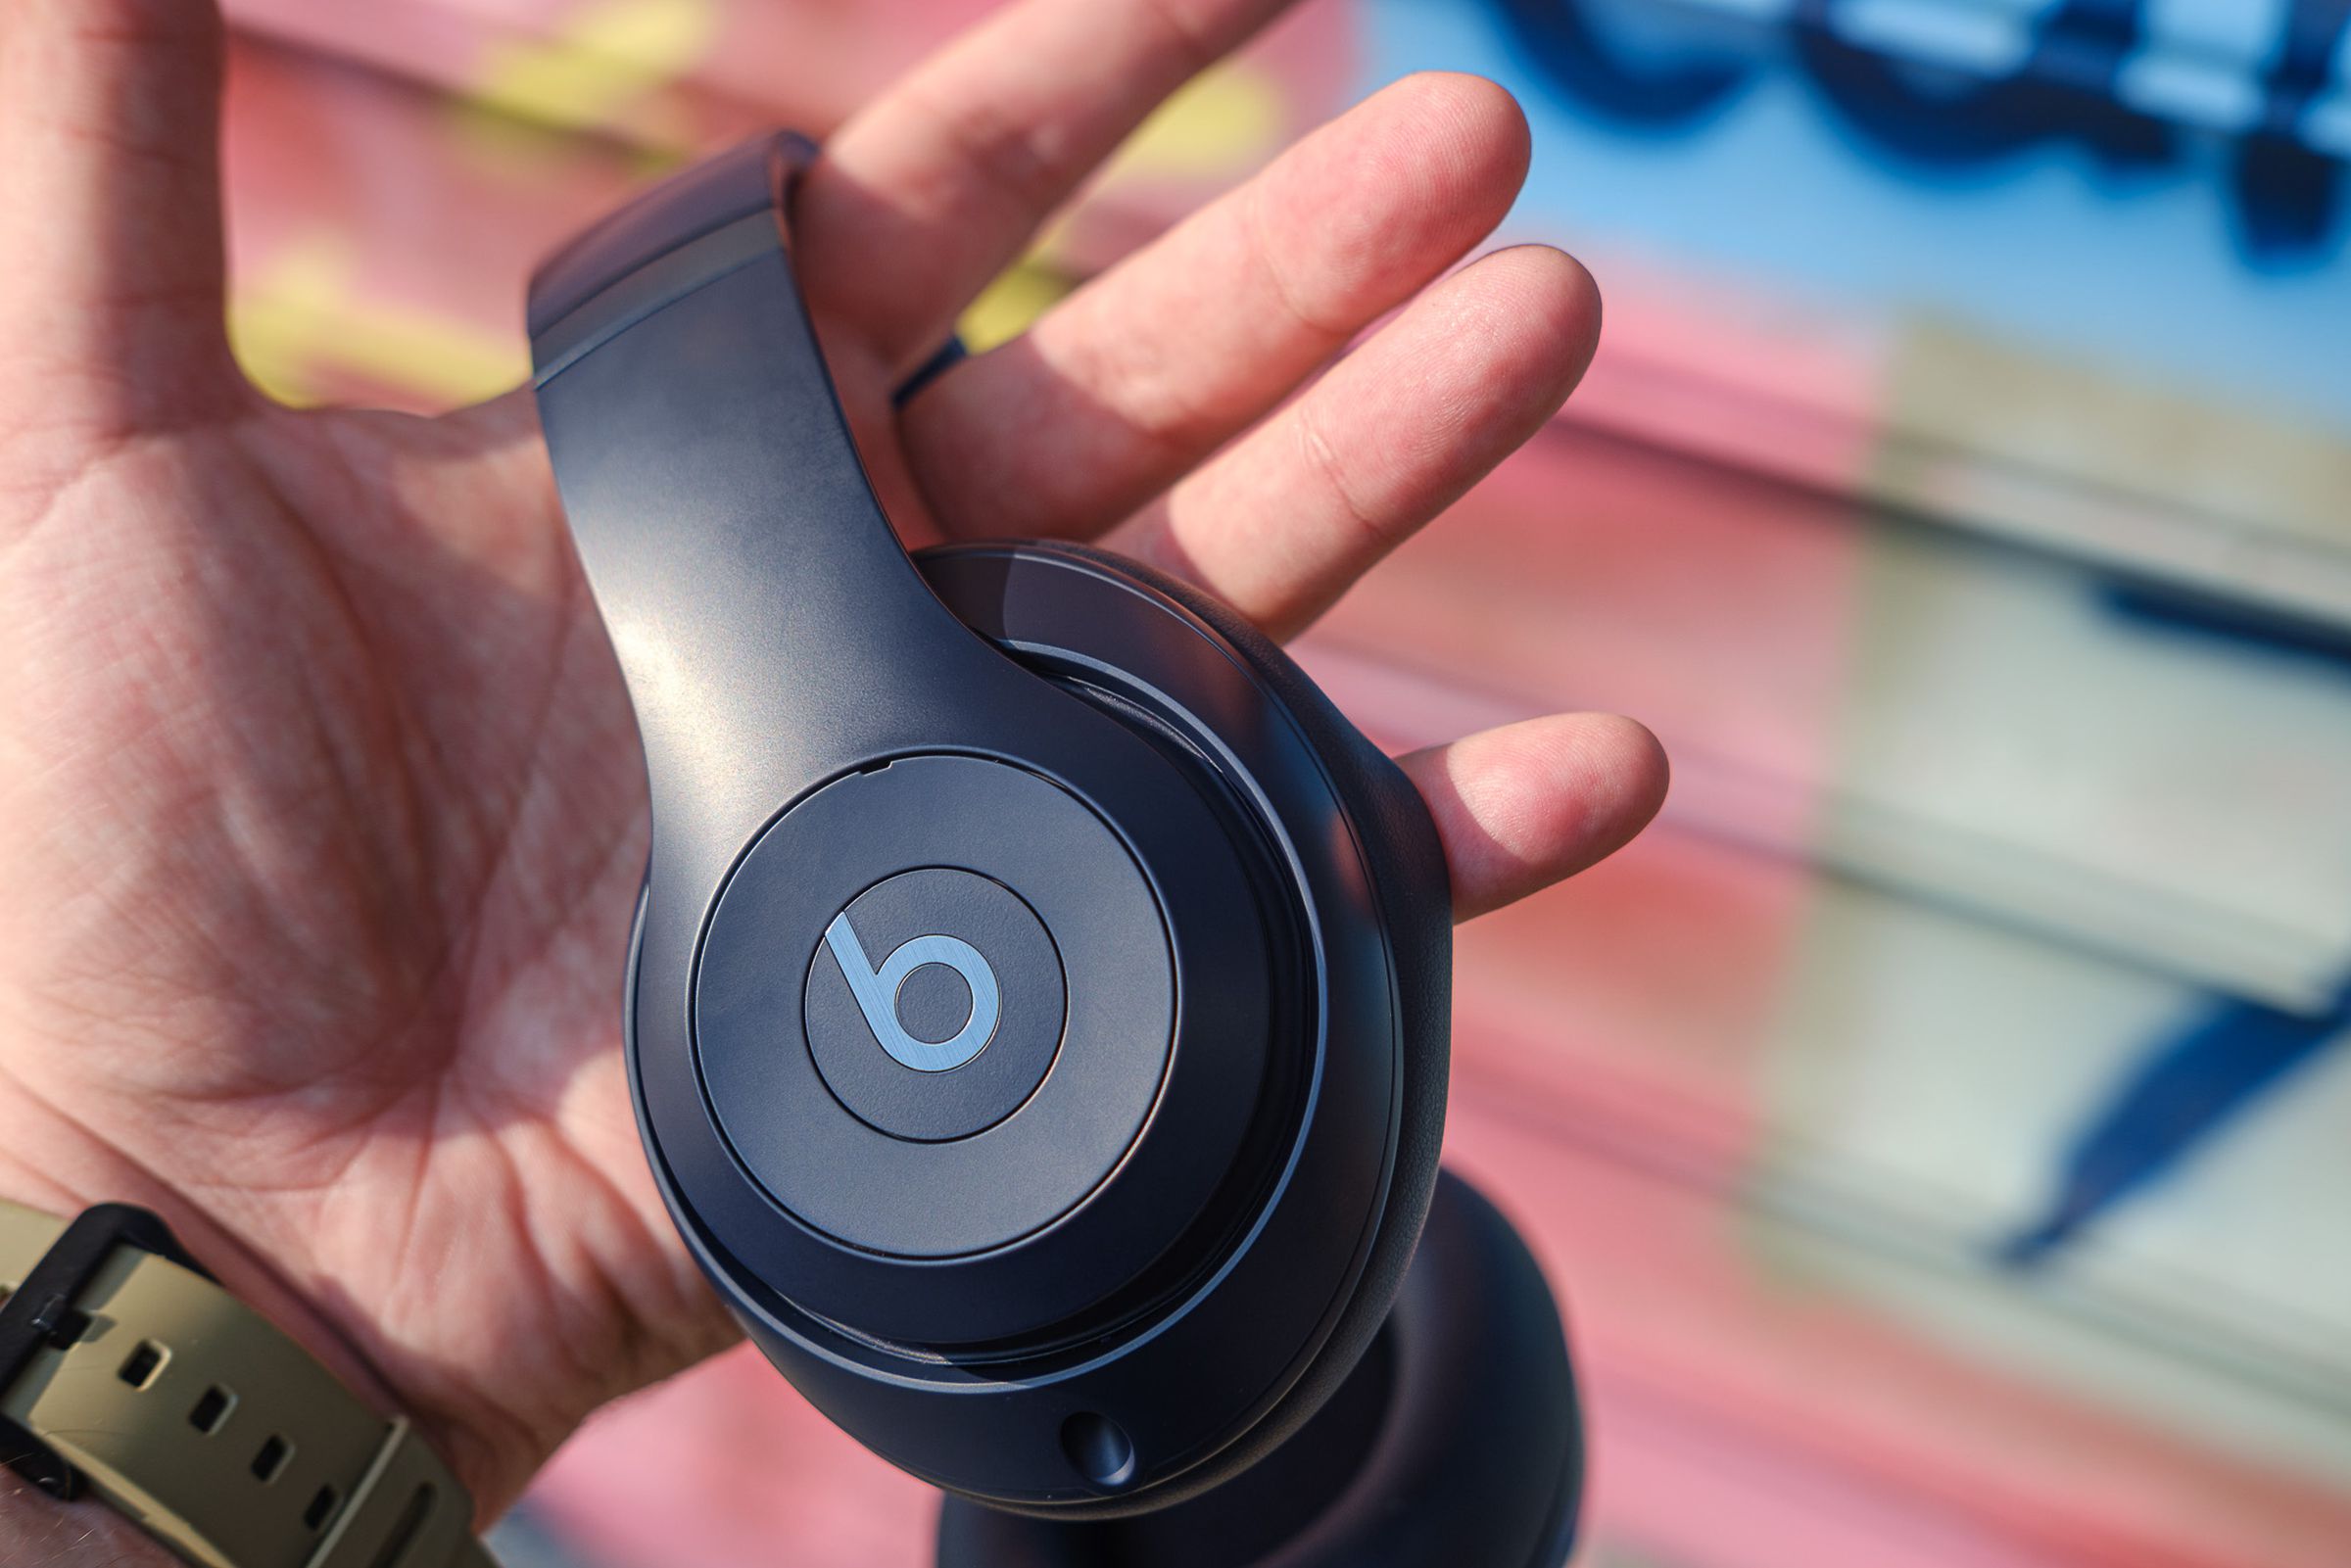 A product photo of the Beats Studio Pro noise-canceling headphones.